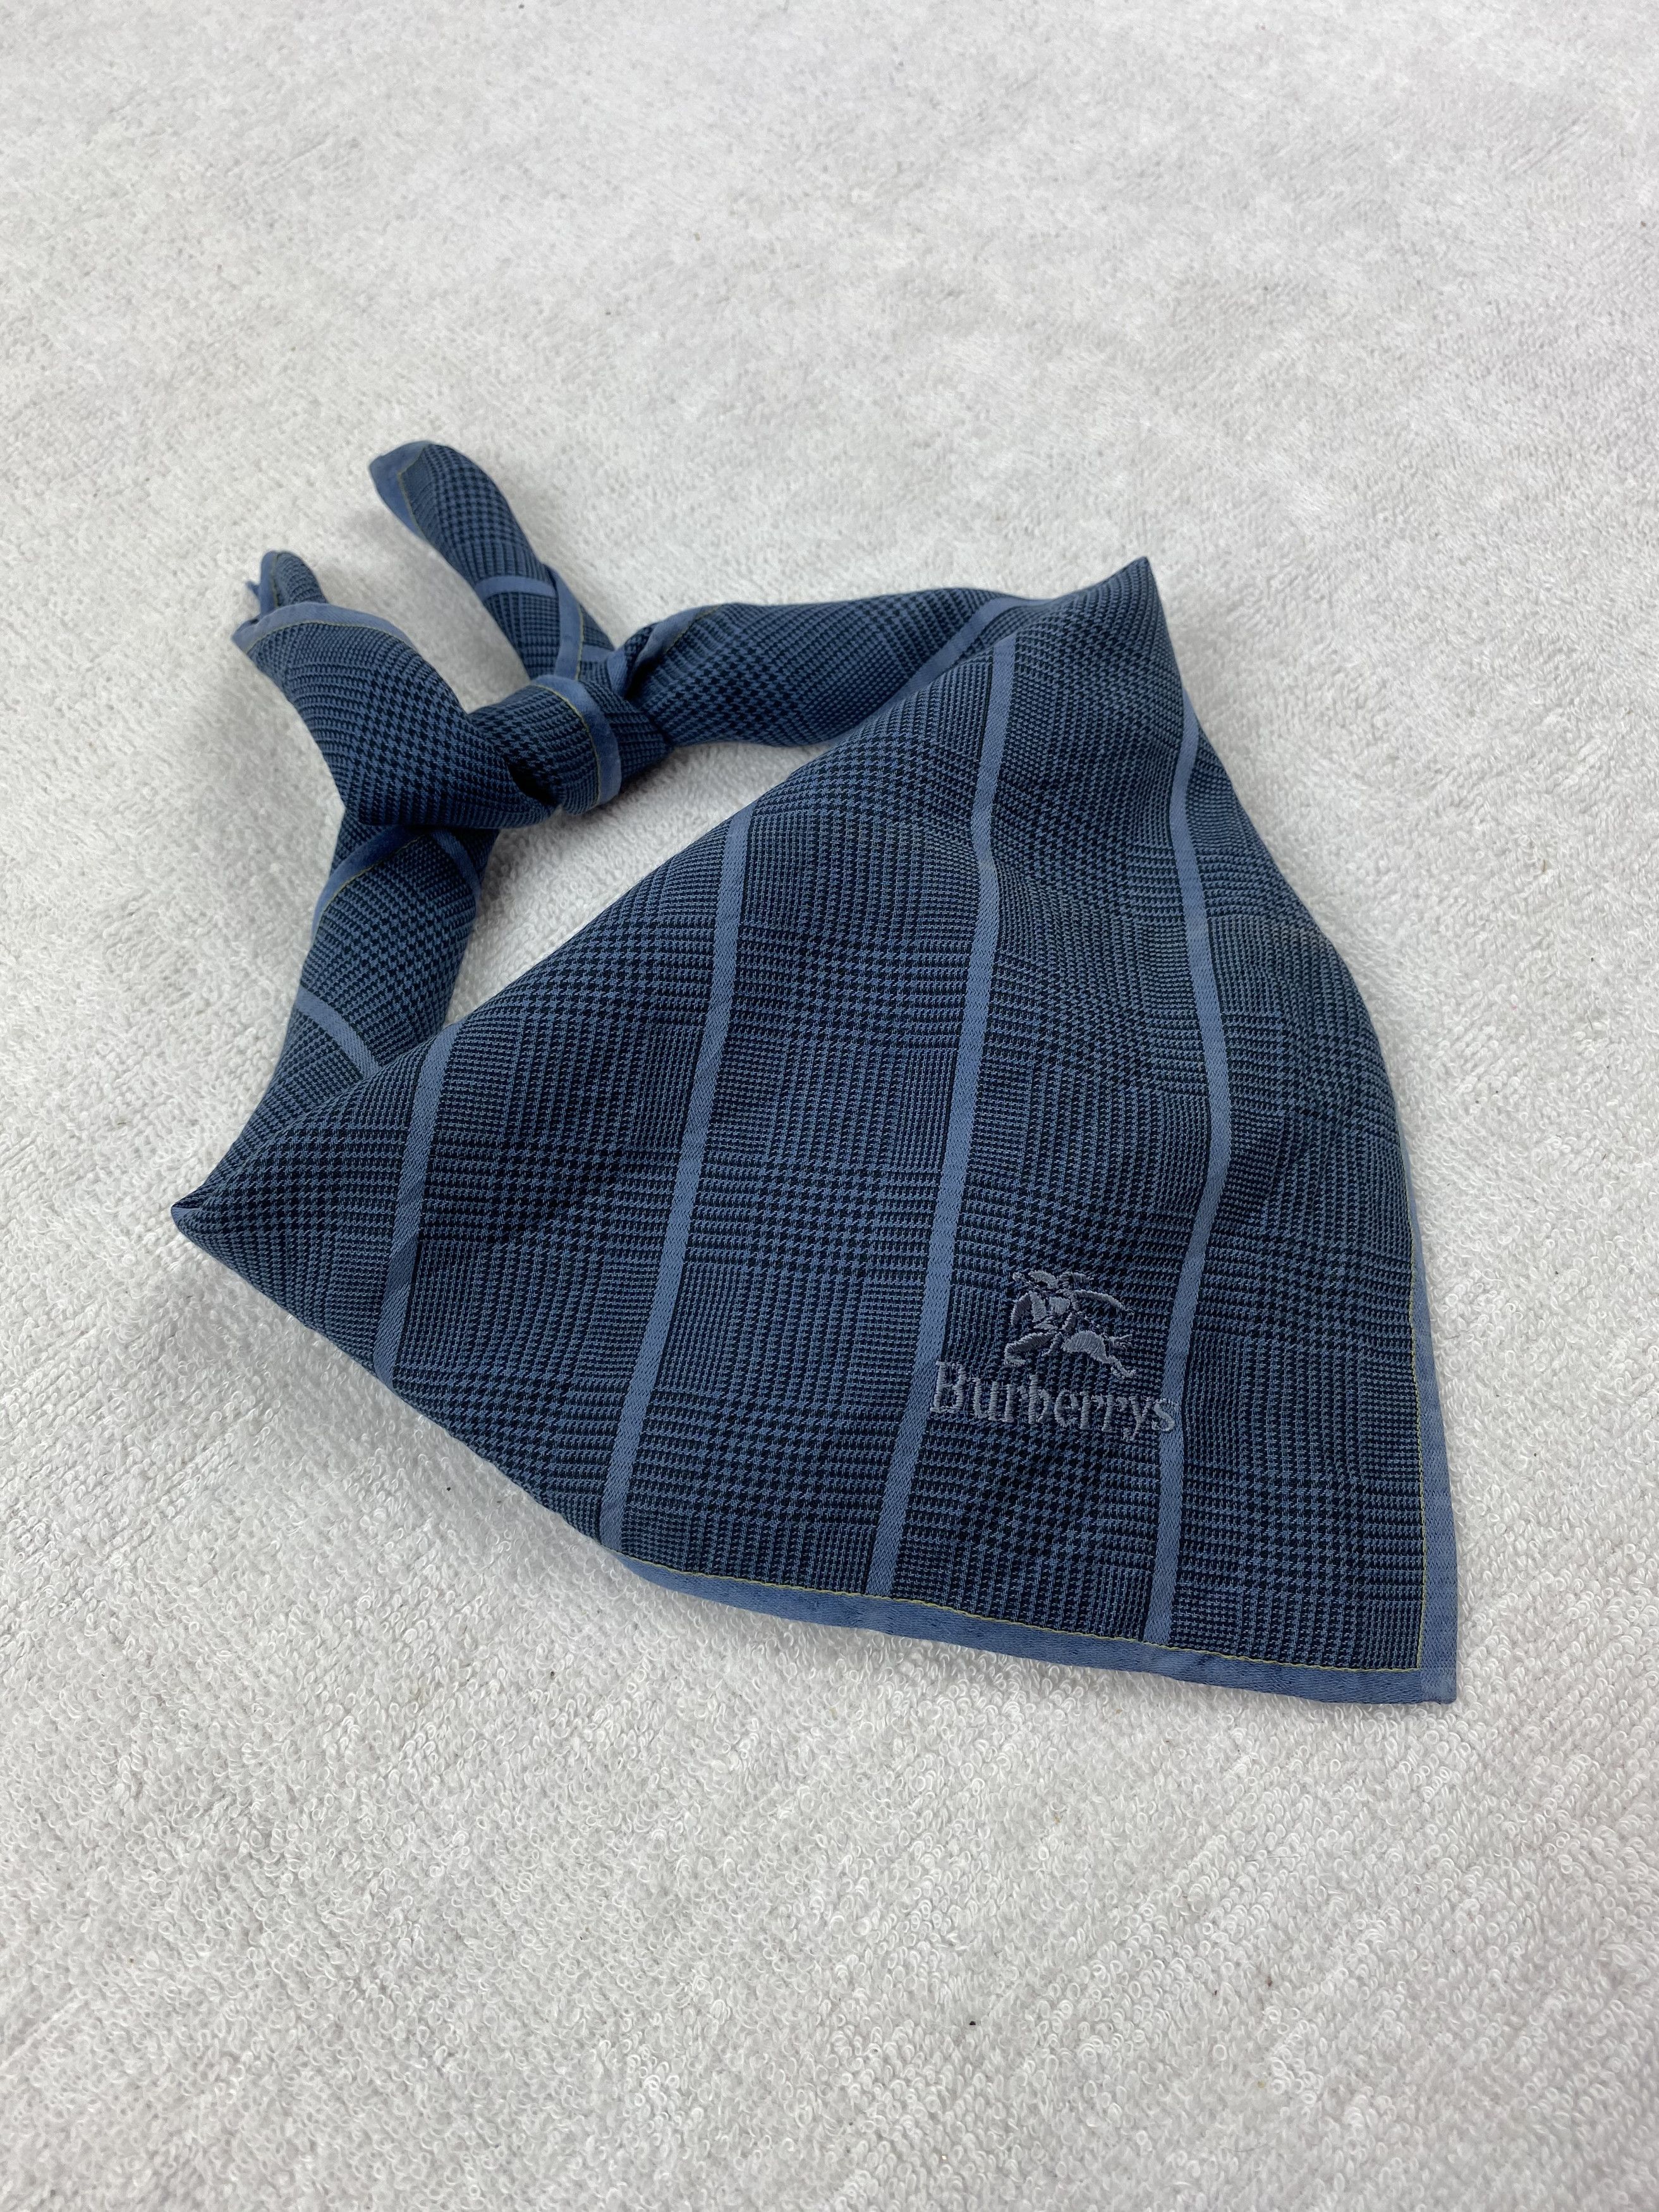 Vintage Burberry Handkerchief / Bandana / Neckerchief Size ONE SIZE - 2 Preview